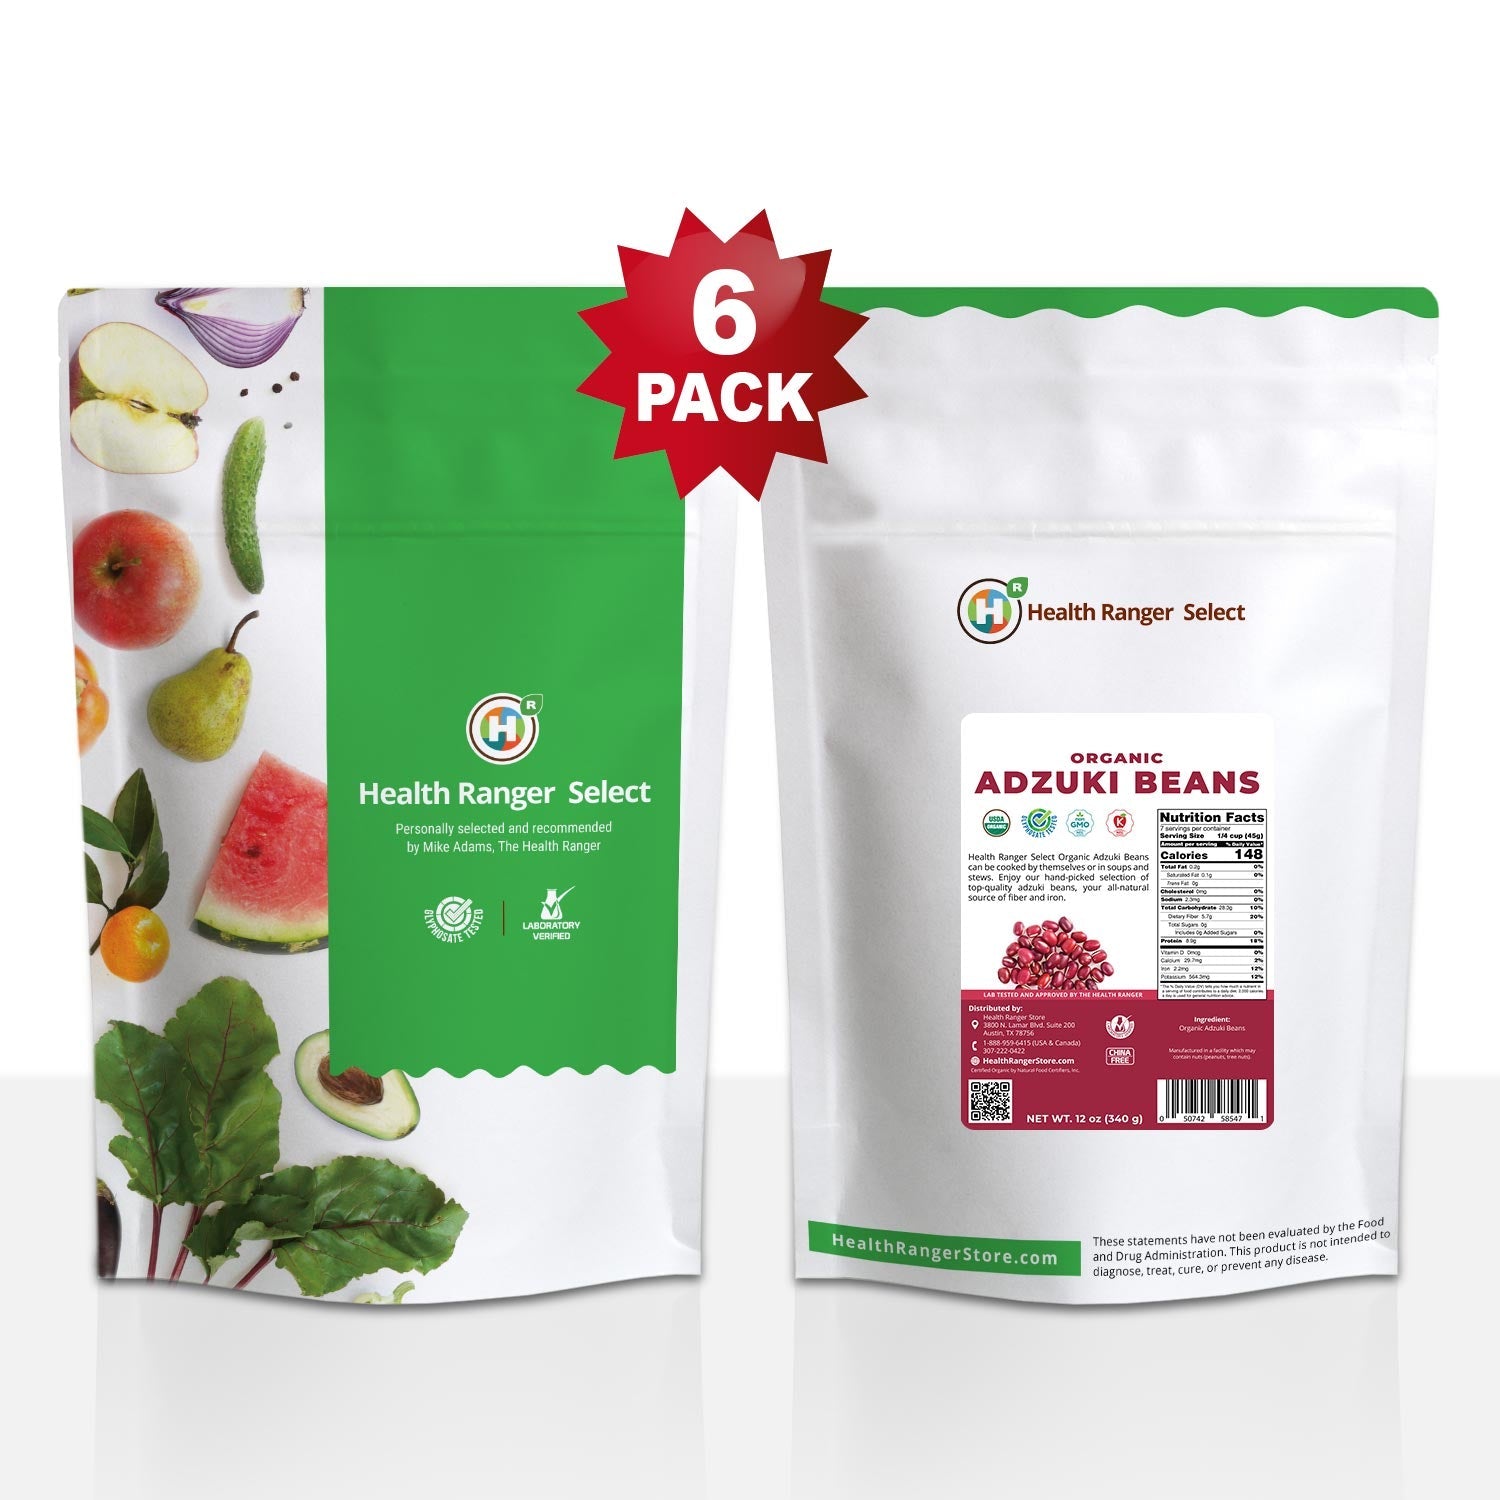 Organic Adzuki Beans 12 oz (340g) (6-Pack)